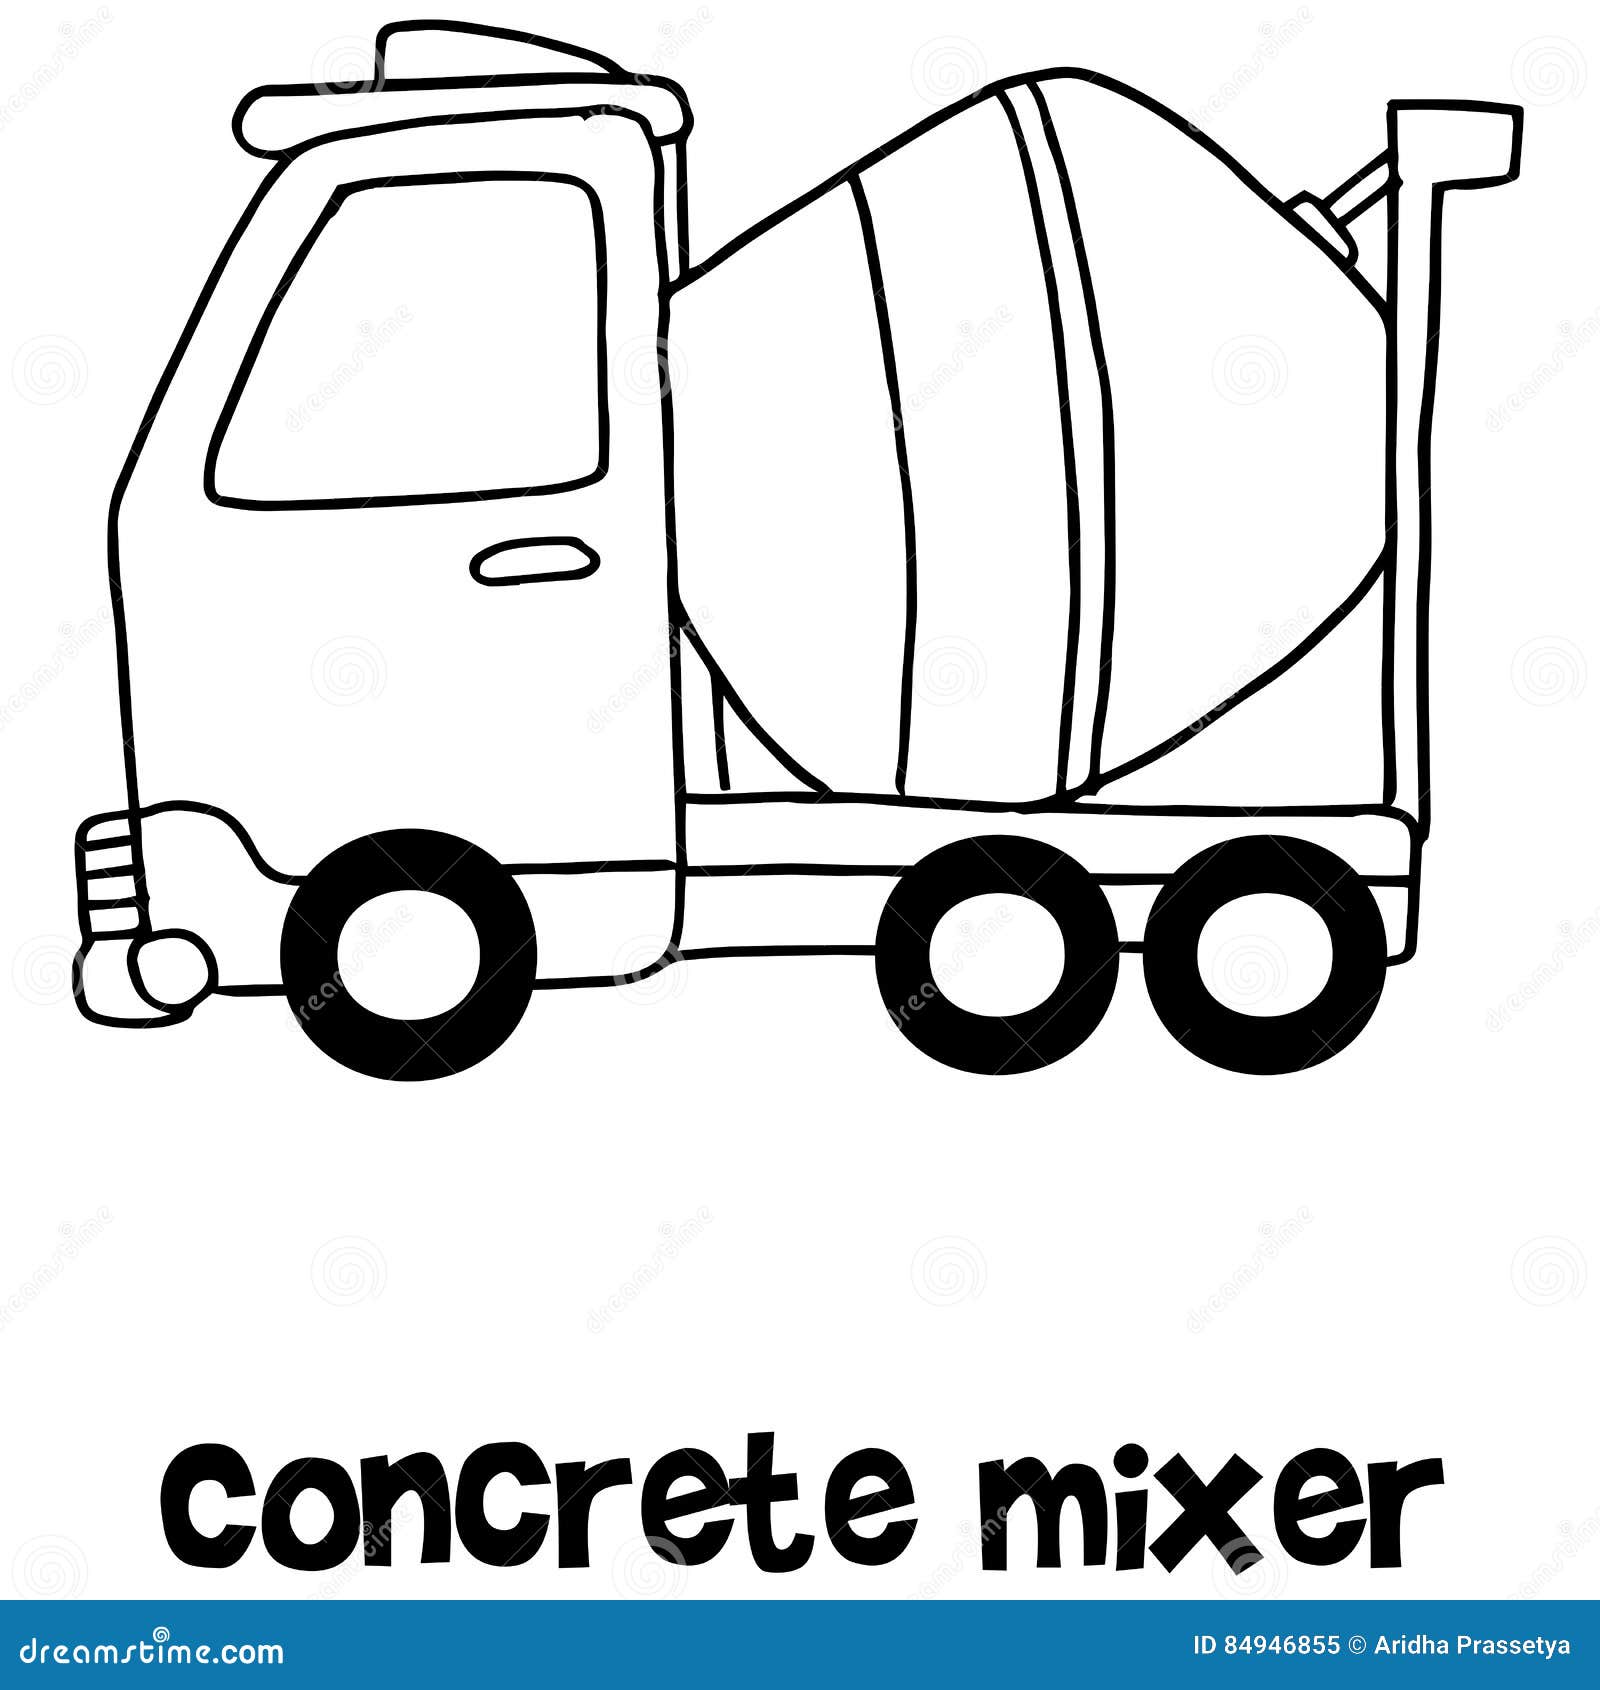 Concrete Mixer Cartoon Hand Draw Stock Vector - Illustration of truck,  equipment: 84946855